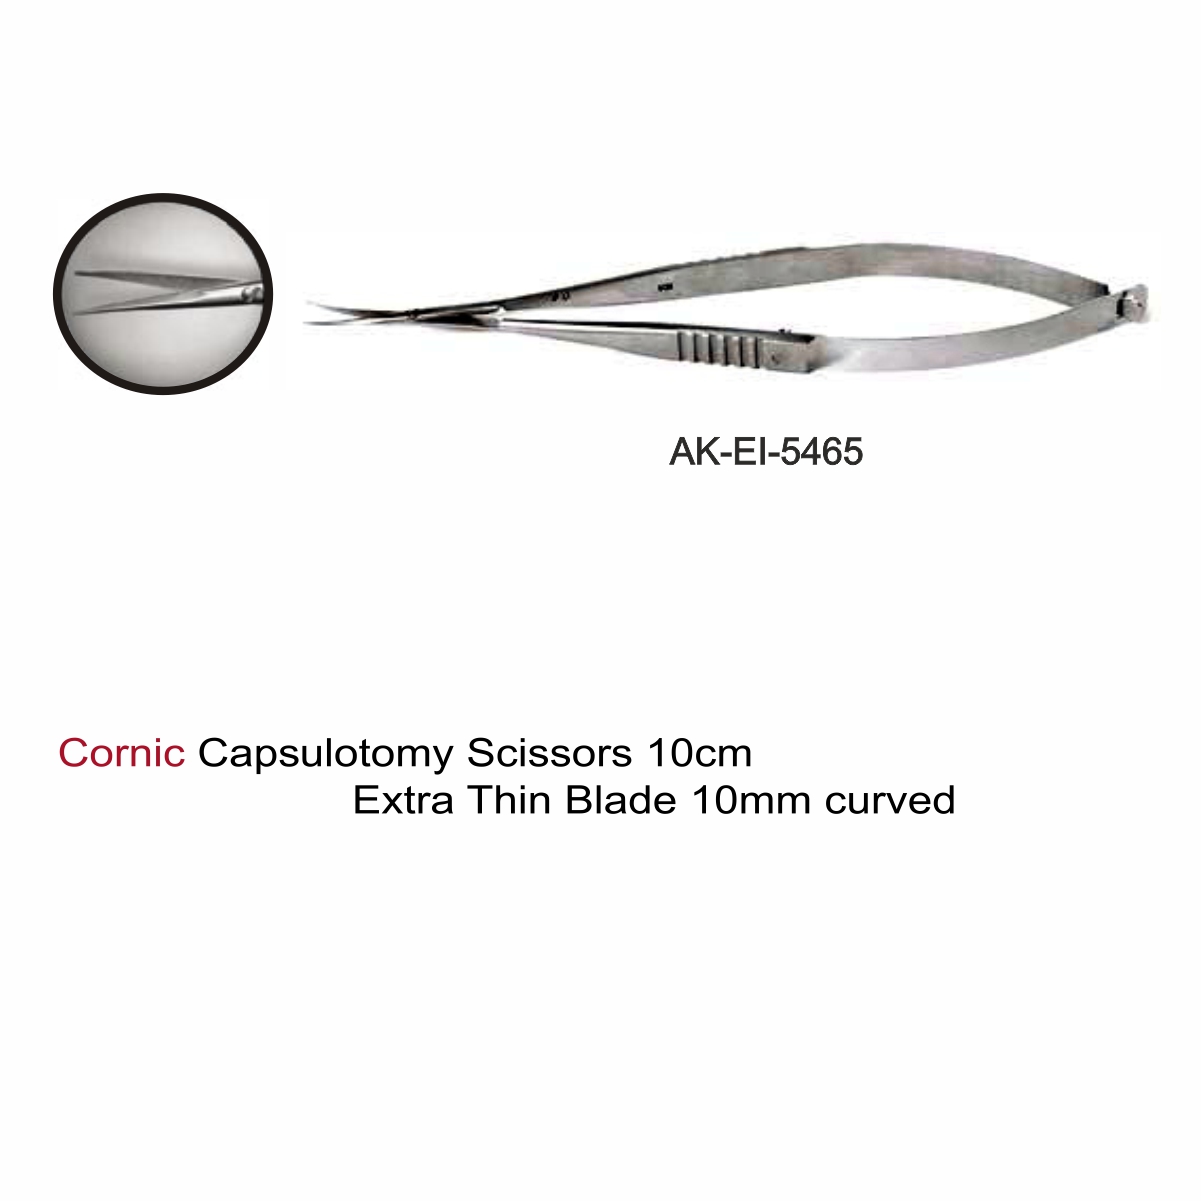 Cornic Capsulotomy Scissors